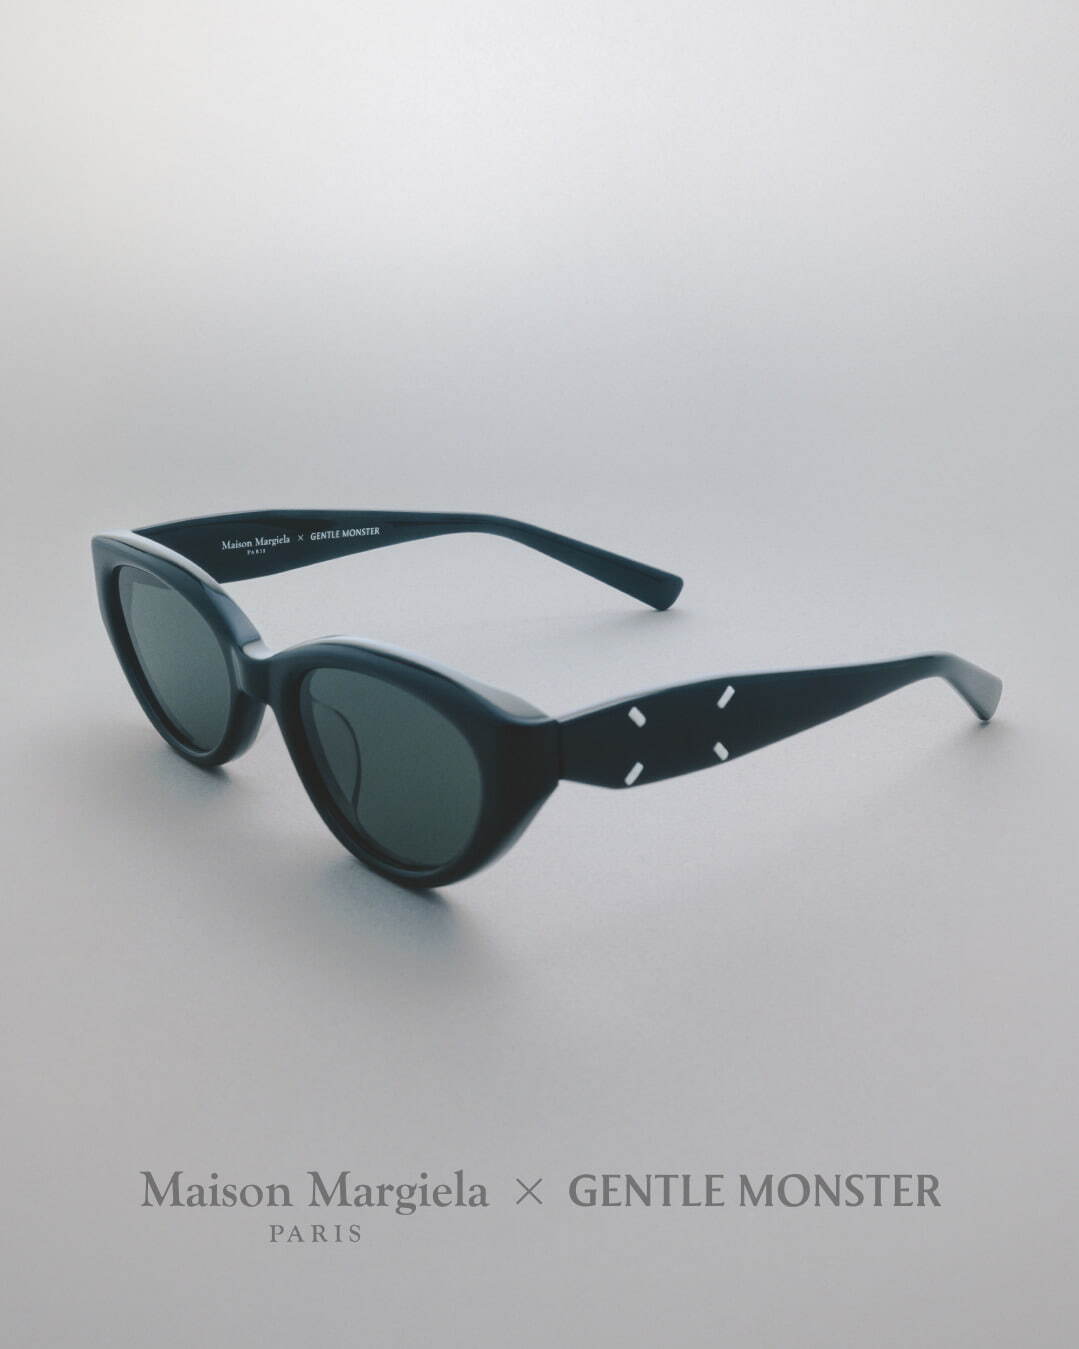 Maison Margiela x Gentle Monster Sunglasses